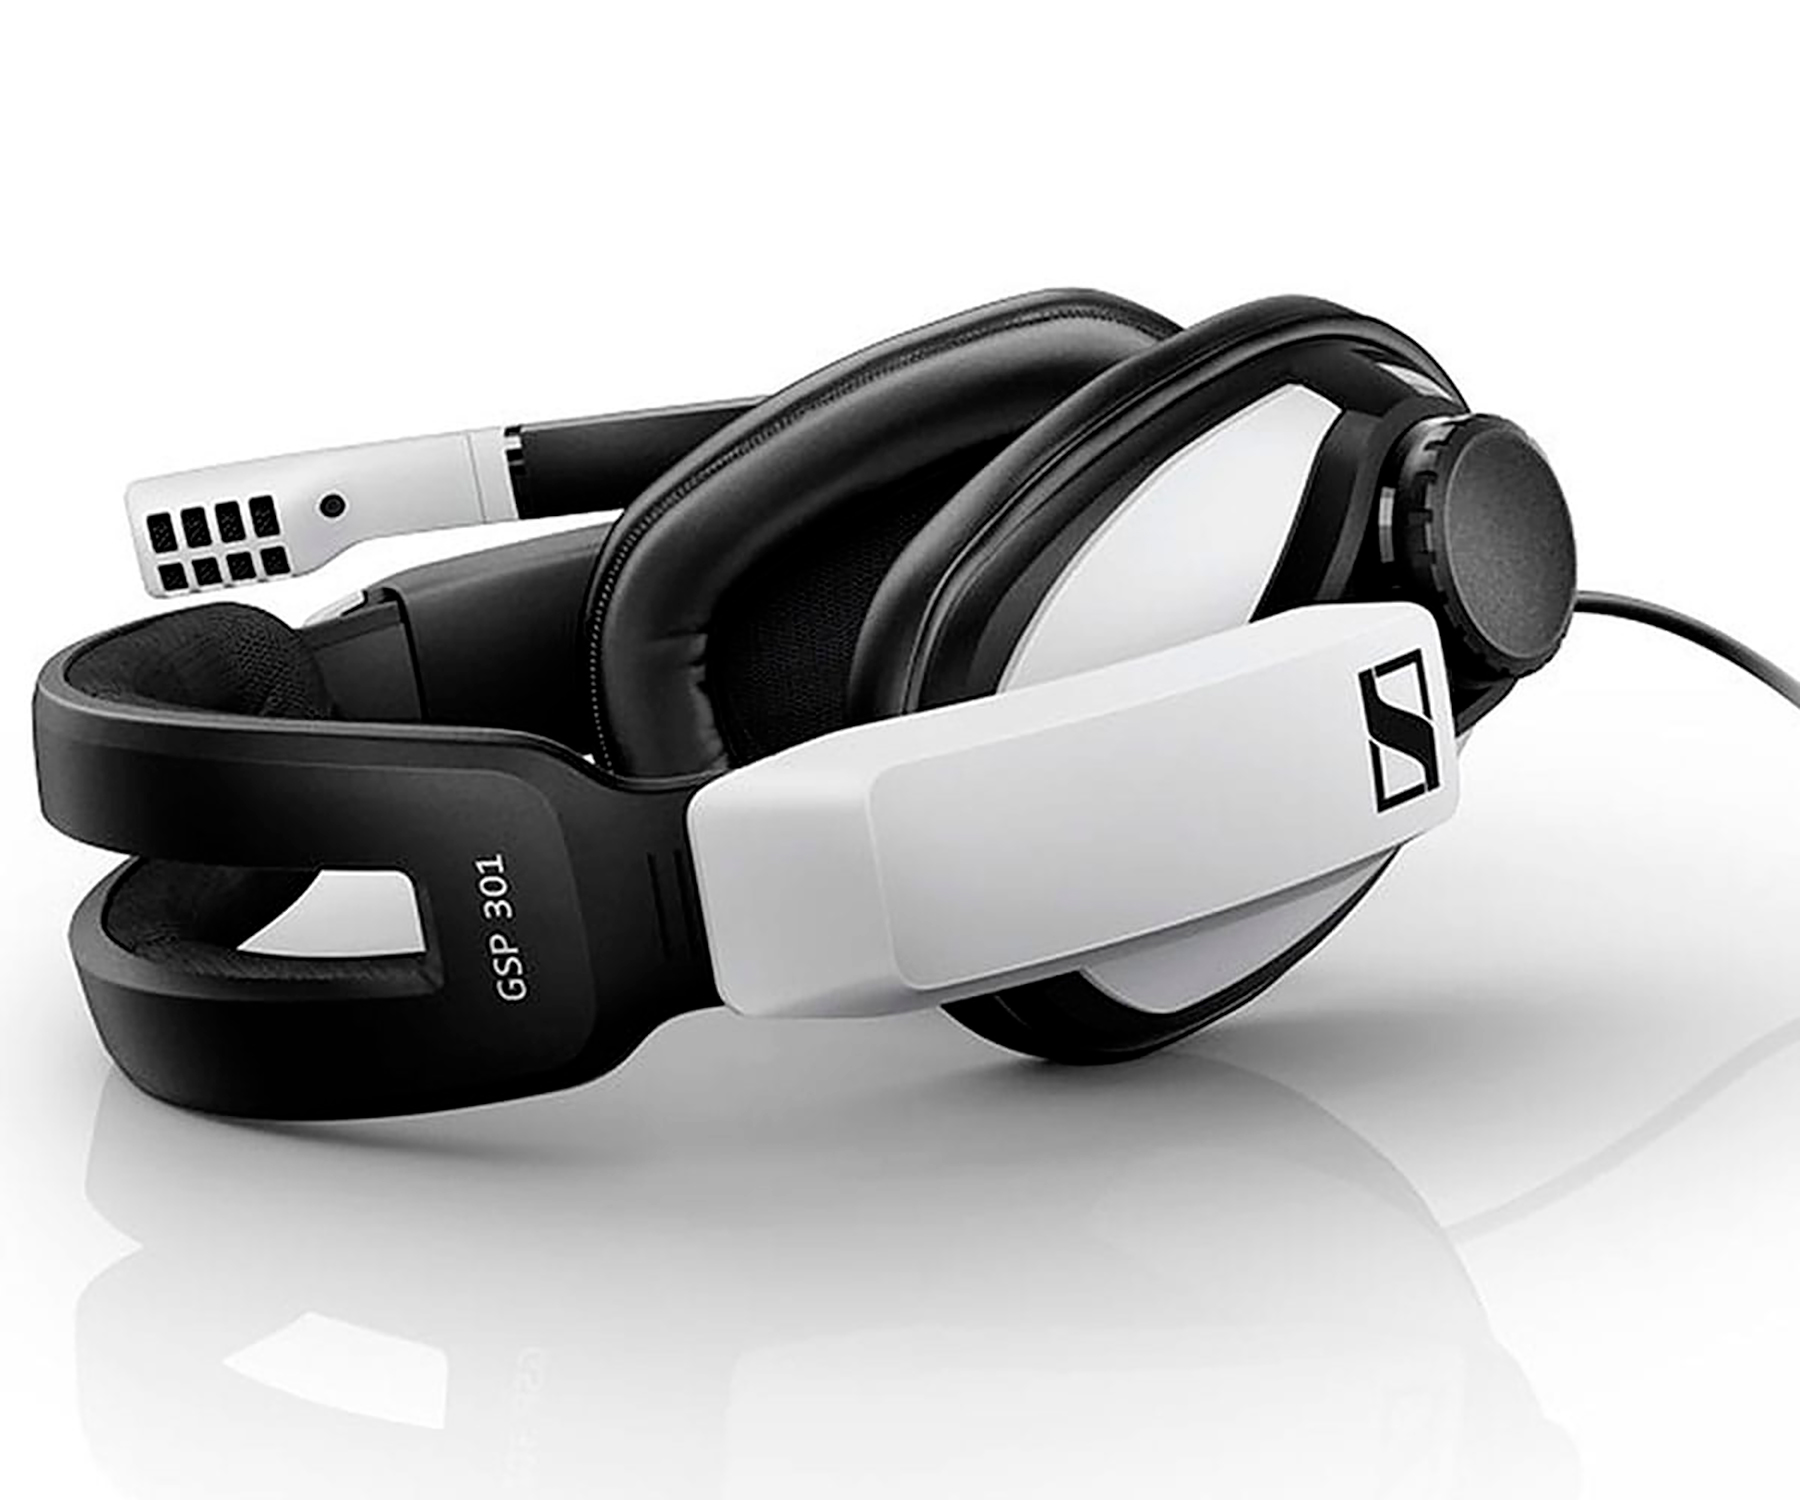 GSP 301 Weiß Headset WEISS, SENNHEISER Gaming Over-ear